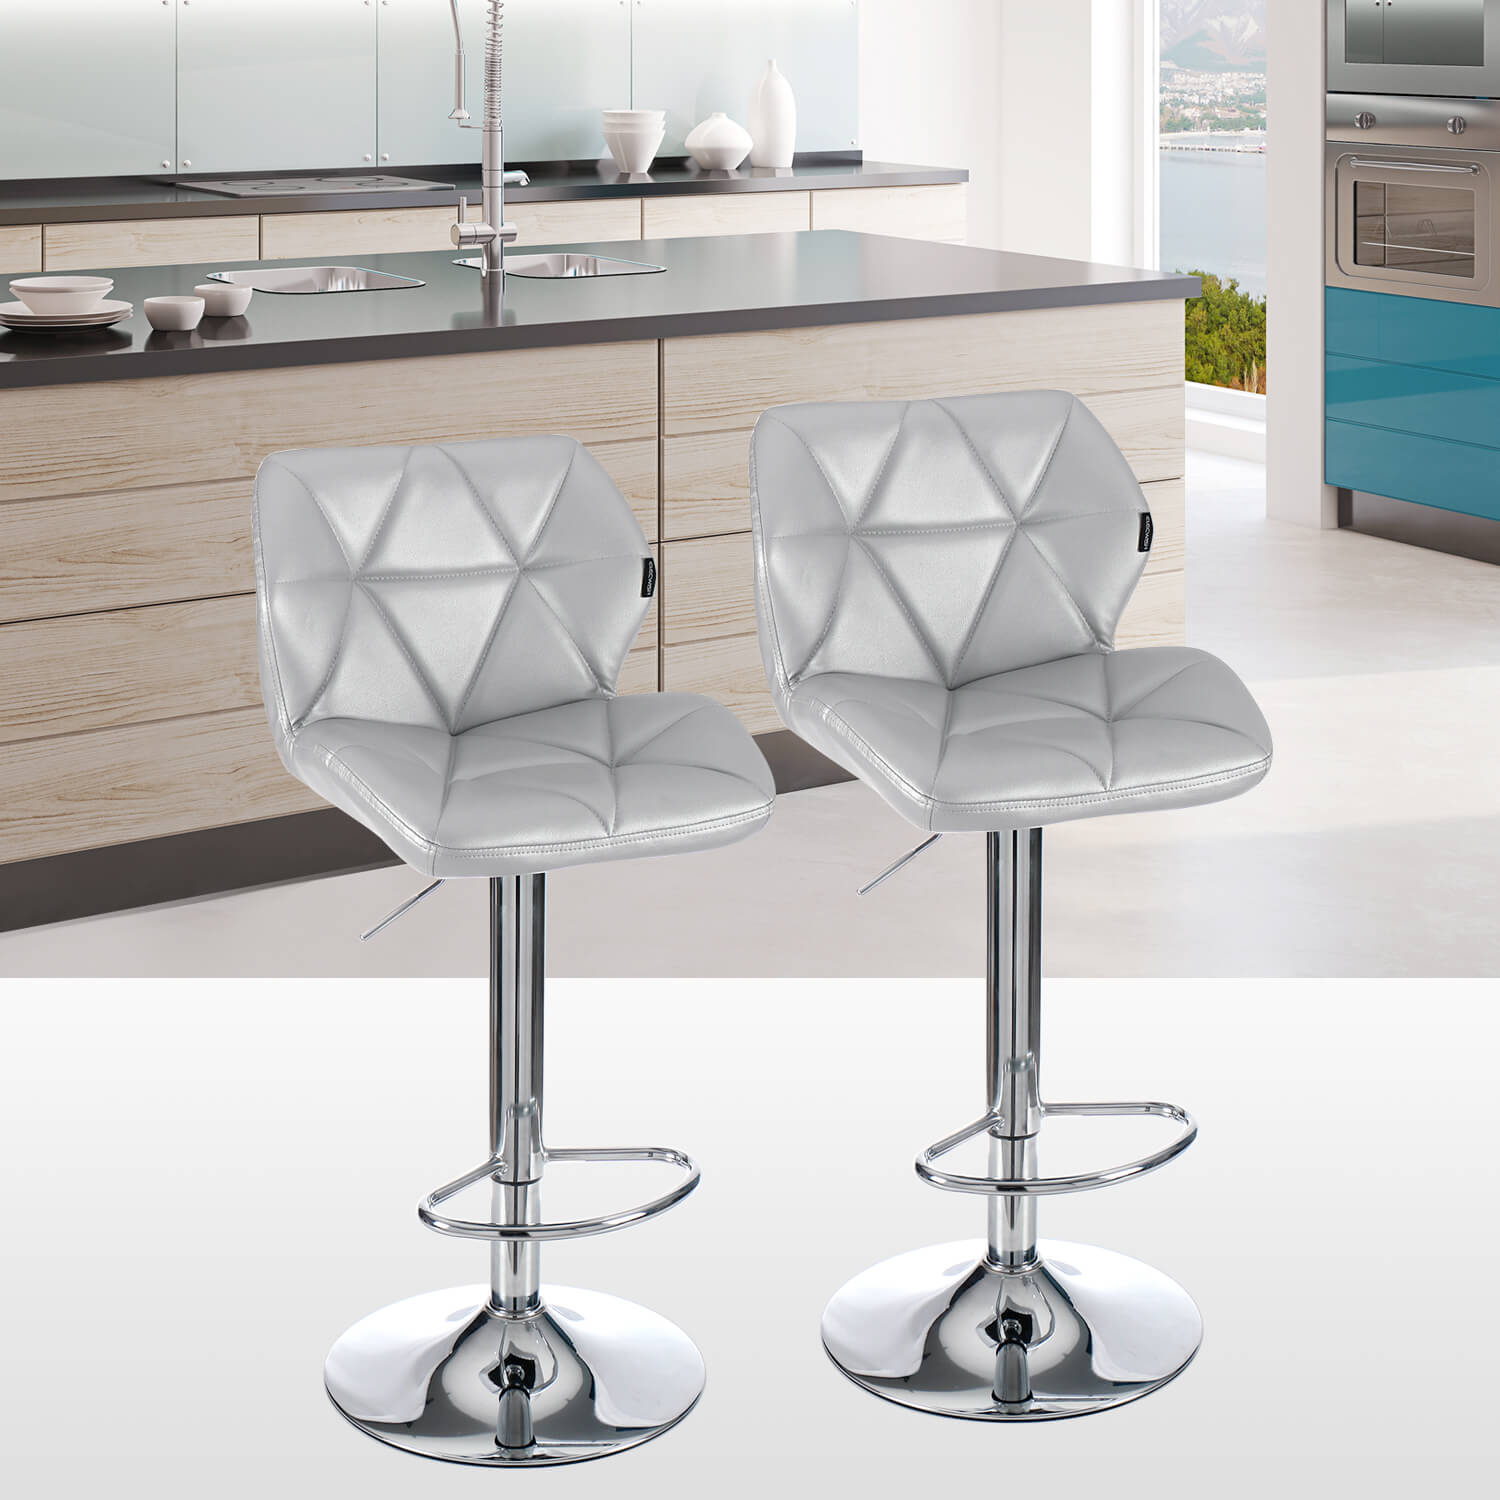 Elecwish silver bar stool OW001 display scene